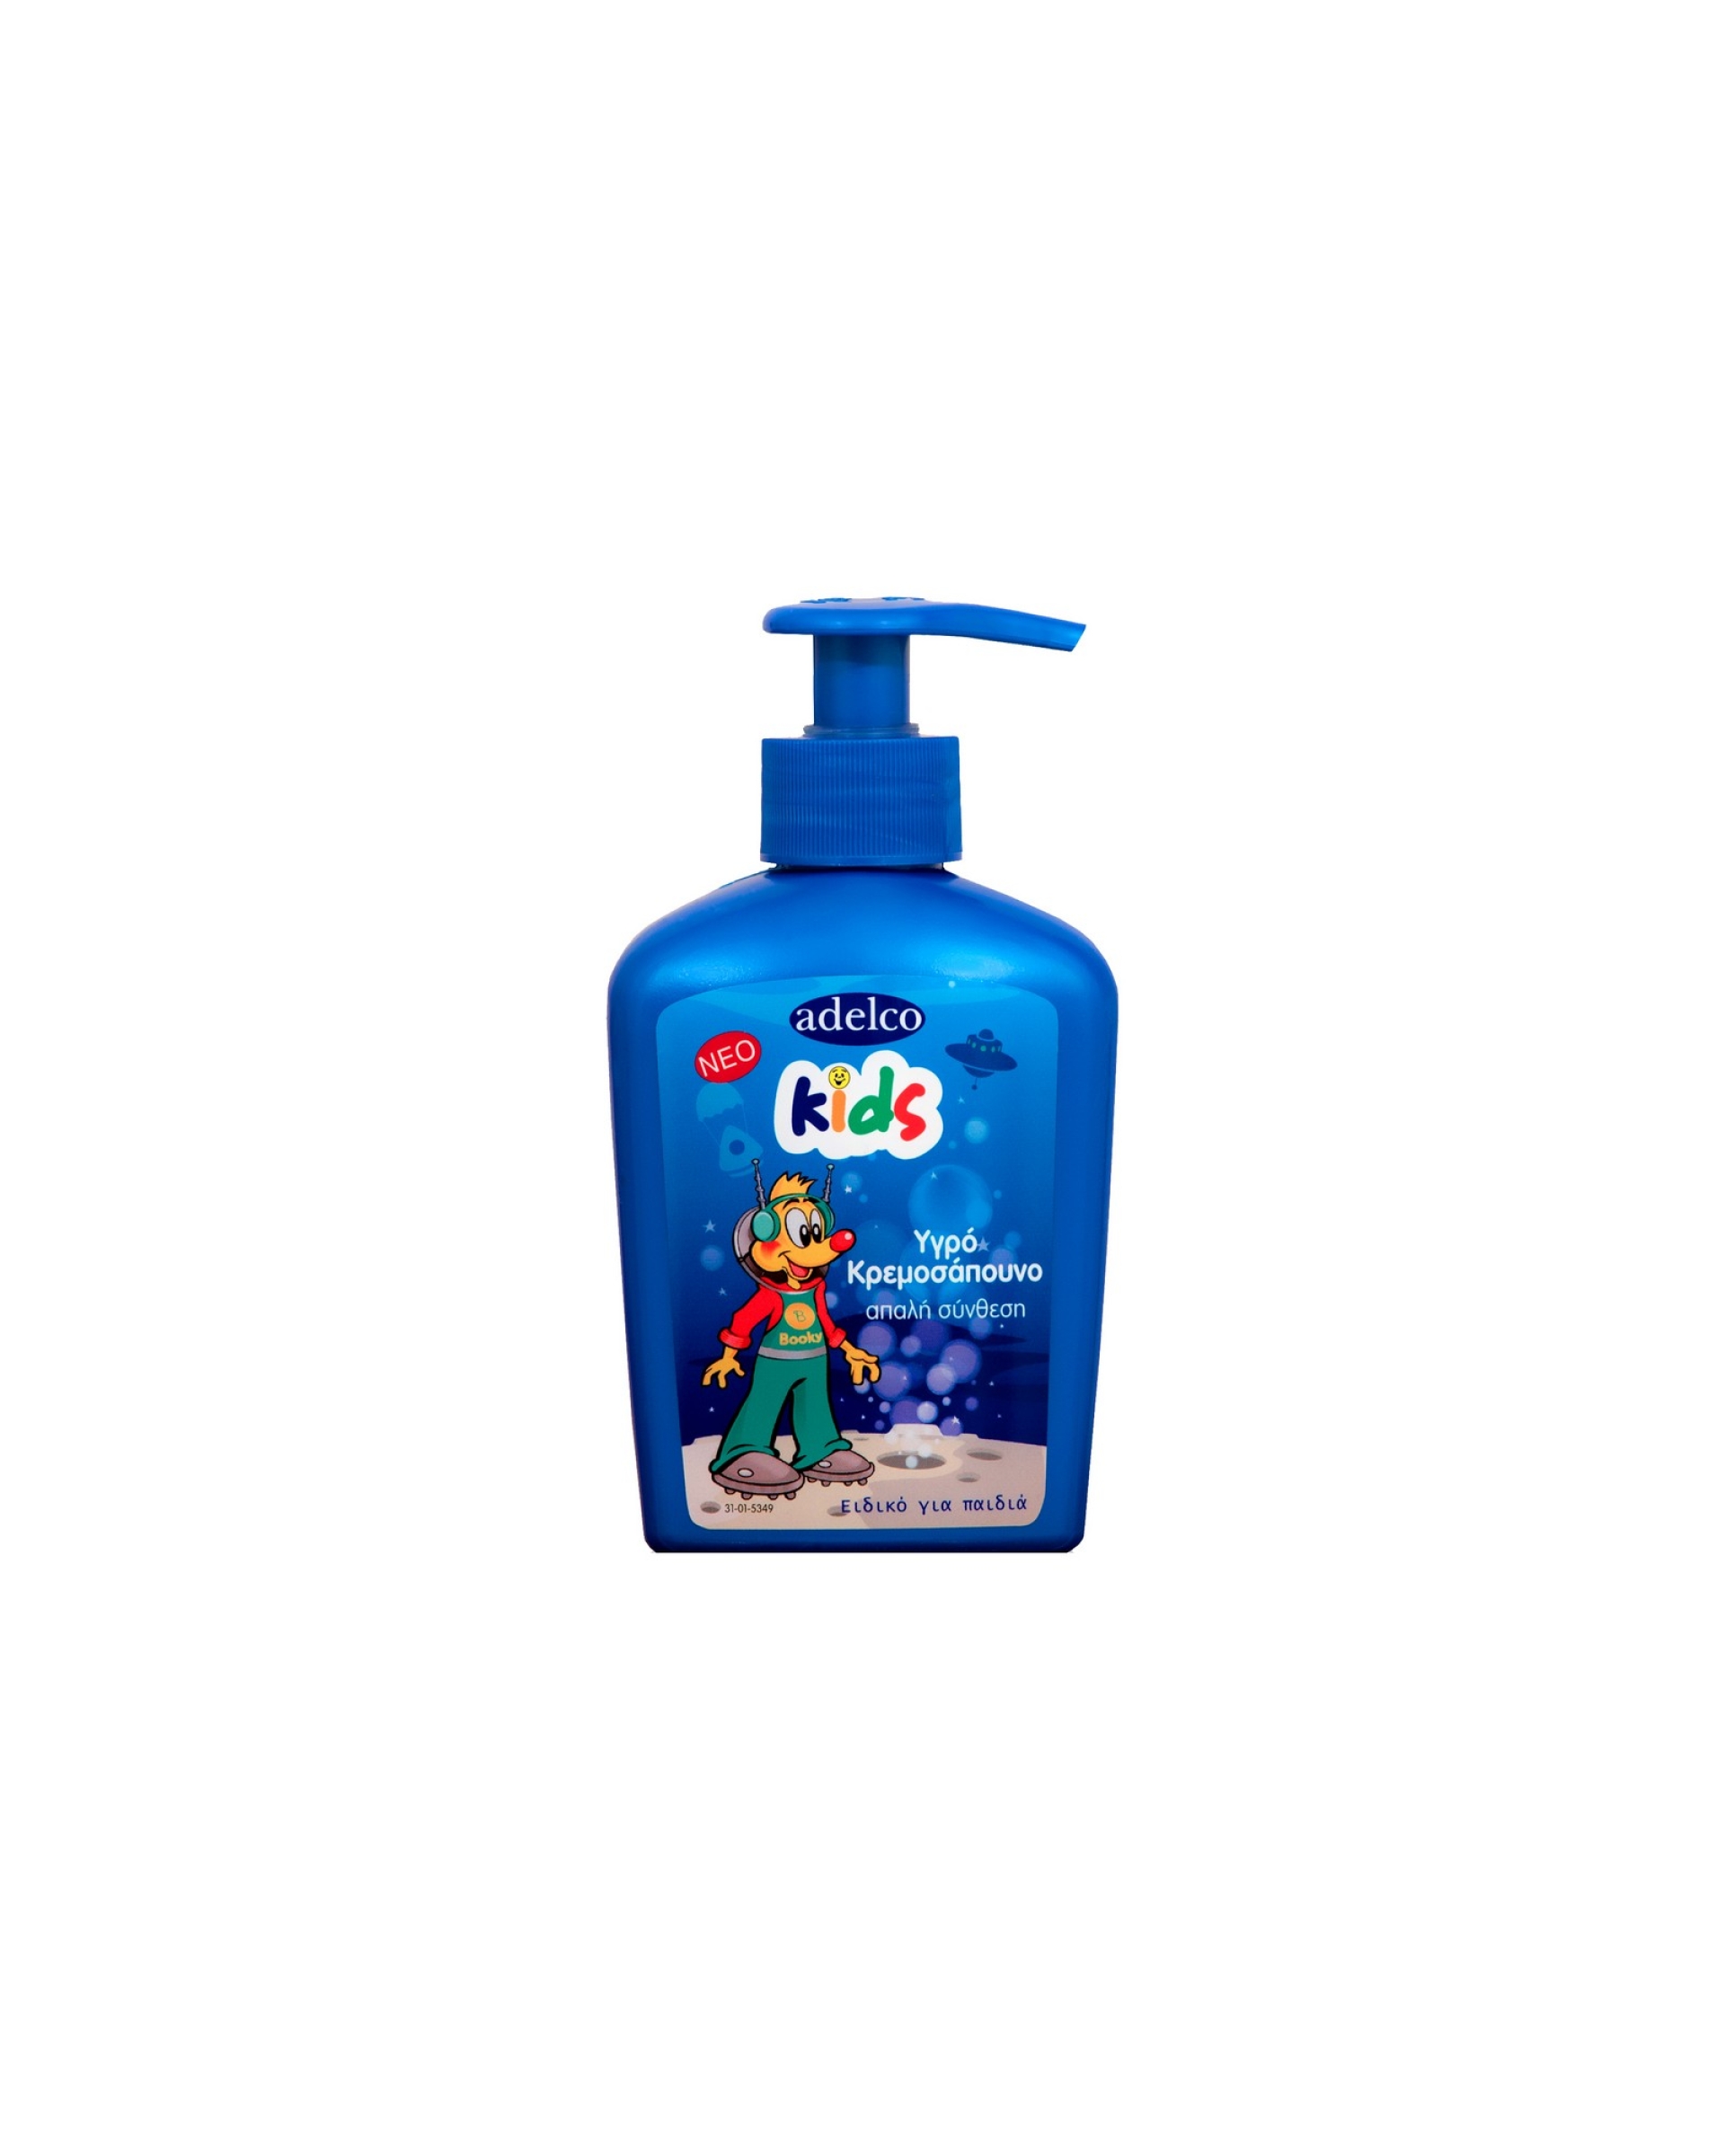 Adelco Kids Liquid hand soap